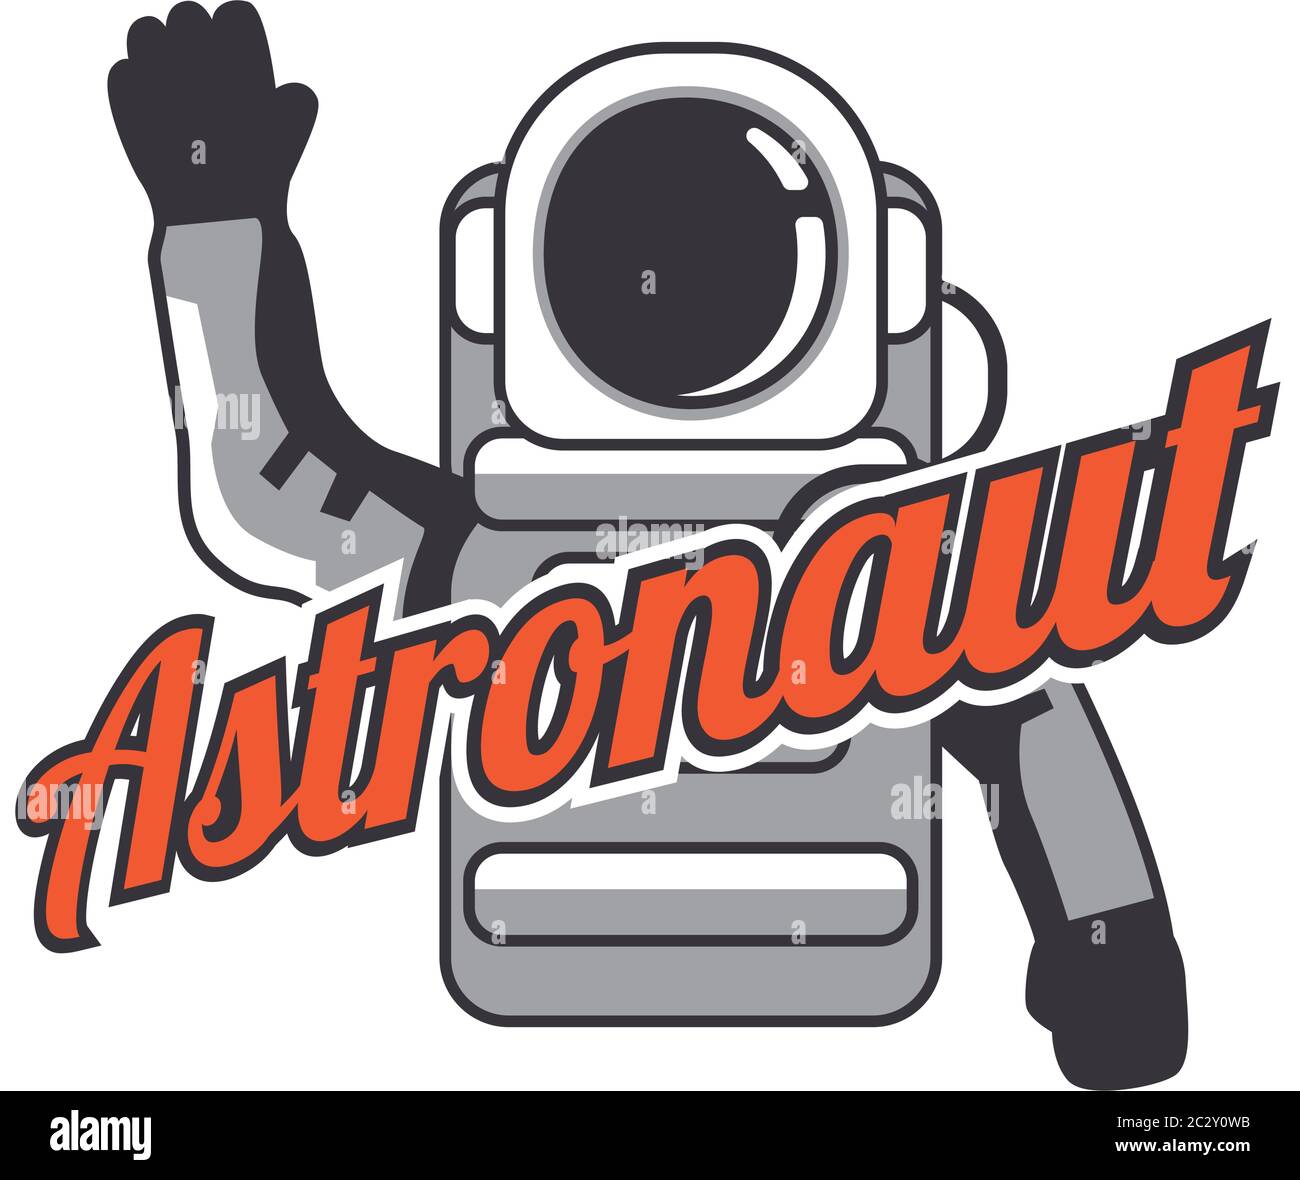 astronaut mascot logo isolated on white background. vector illustration Stock Vector